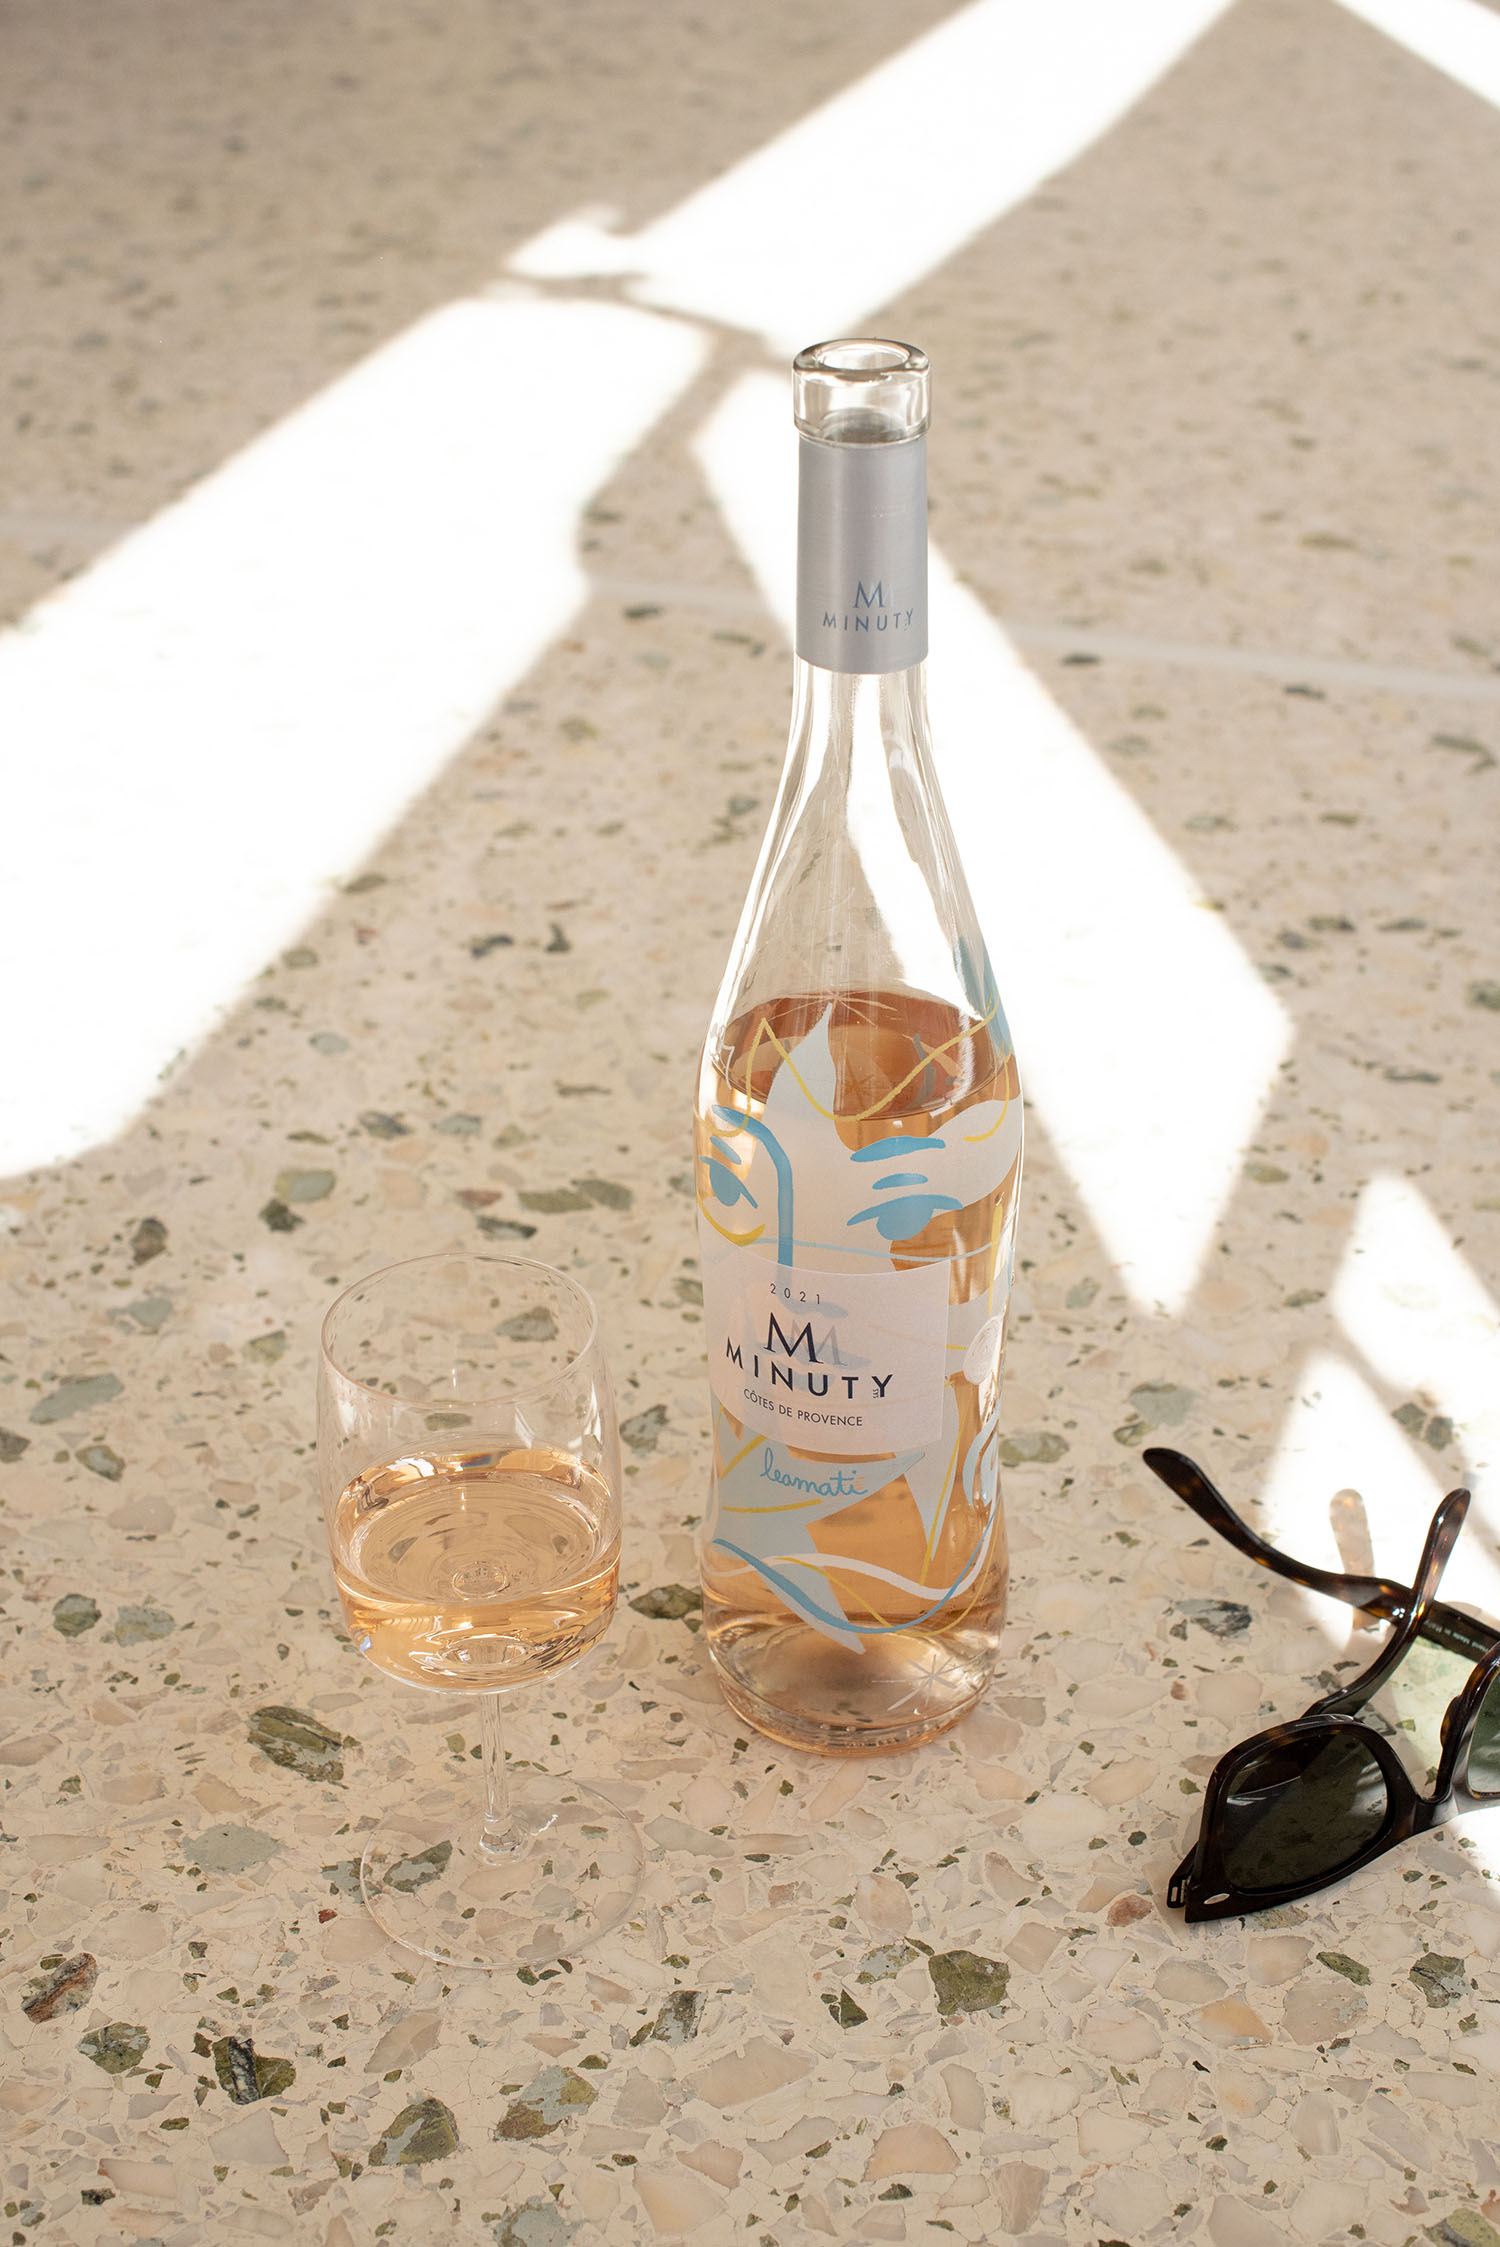 Coco & Vera - Minuty Rosę wine bottle and glass, RayBan Wayfarer sunglasses